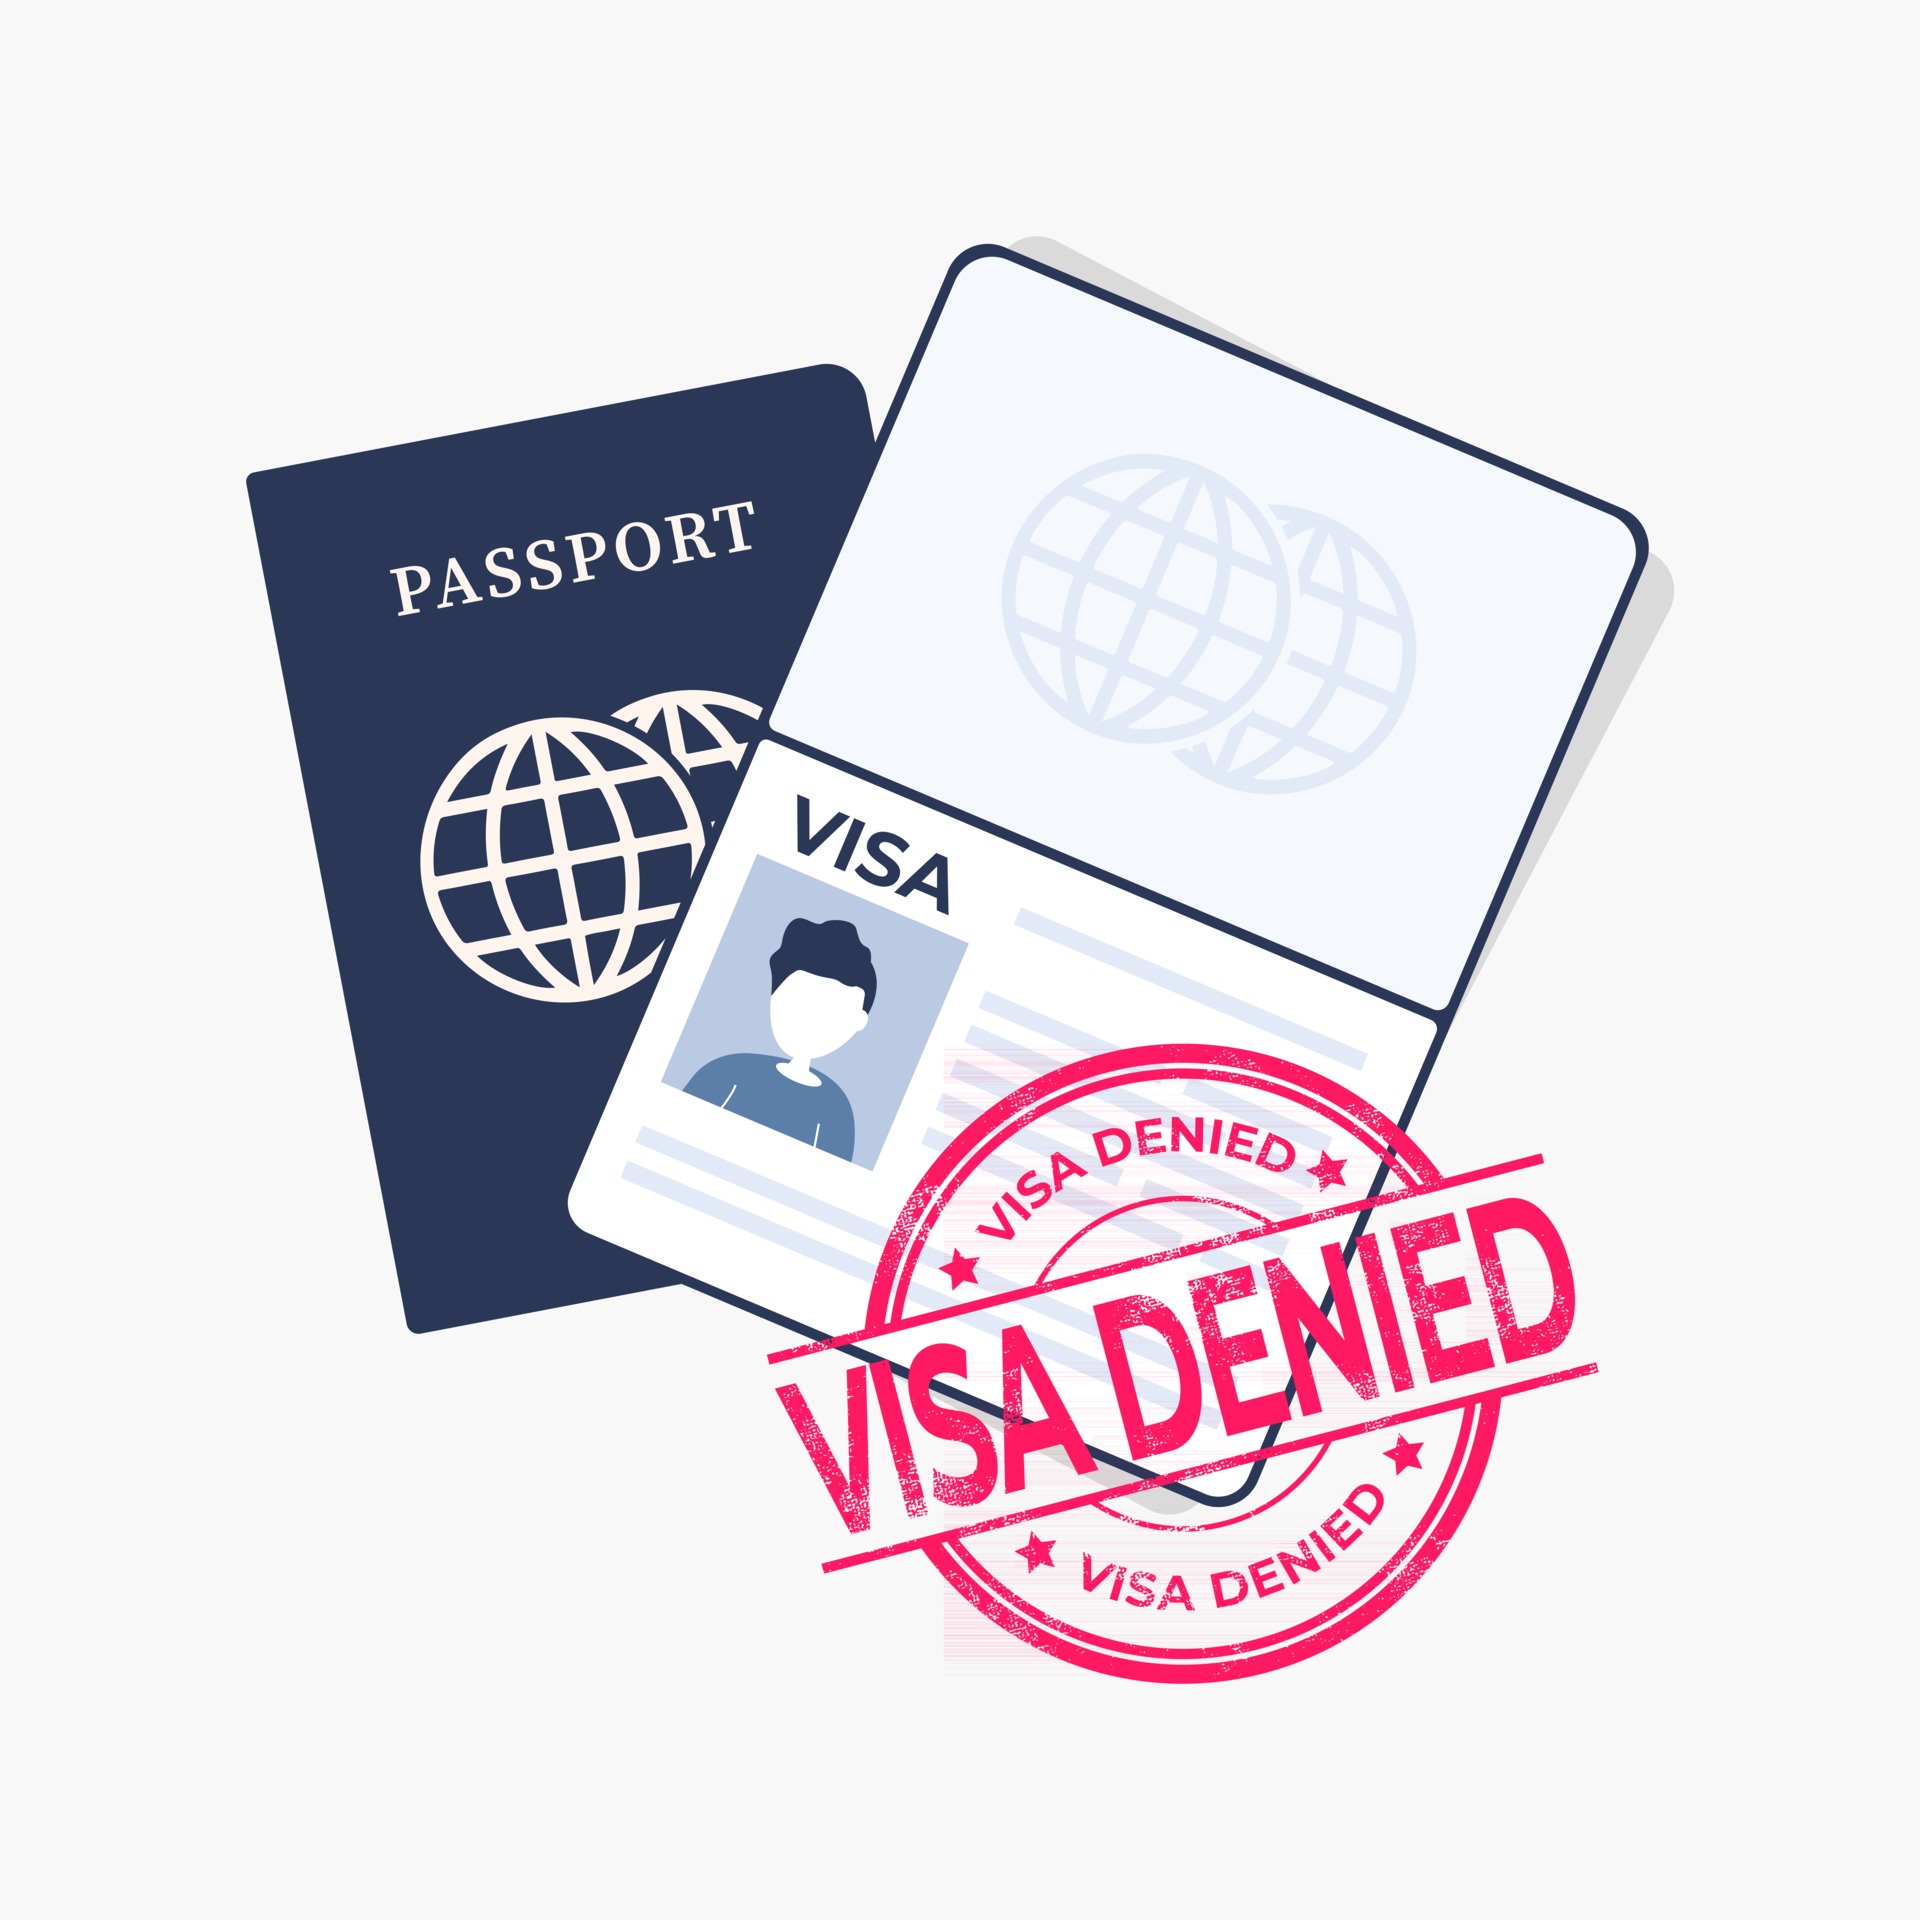 Visa Stamping stamp on Passport application vector image